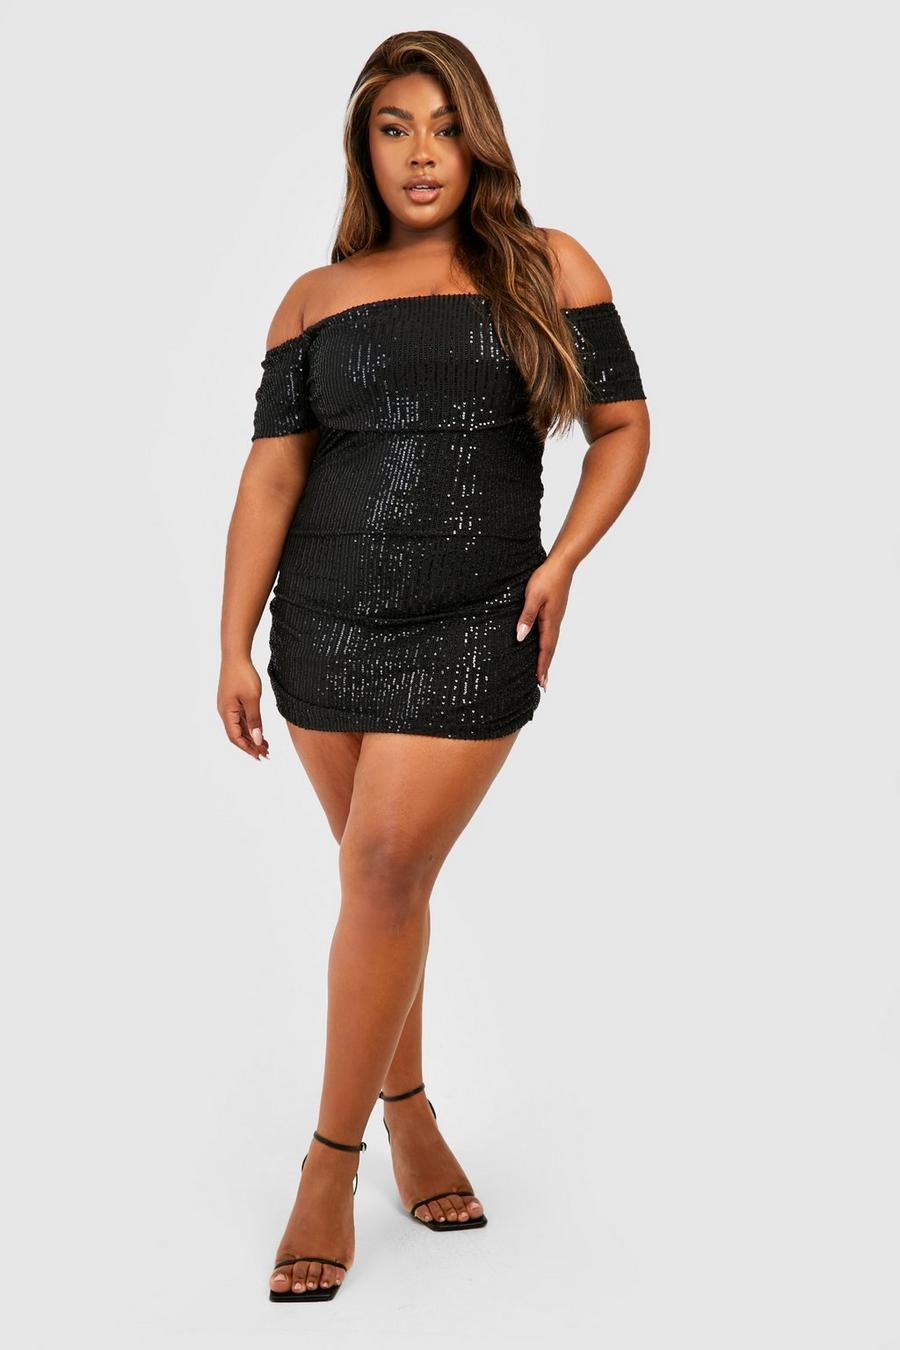 Black שמלת מיני עם כתפיים חשופות, קפלים ועיטור פייטים למידות גדולות image number 1